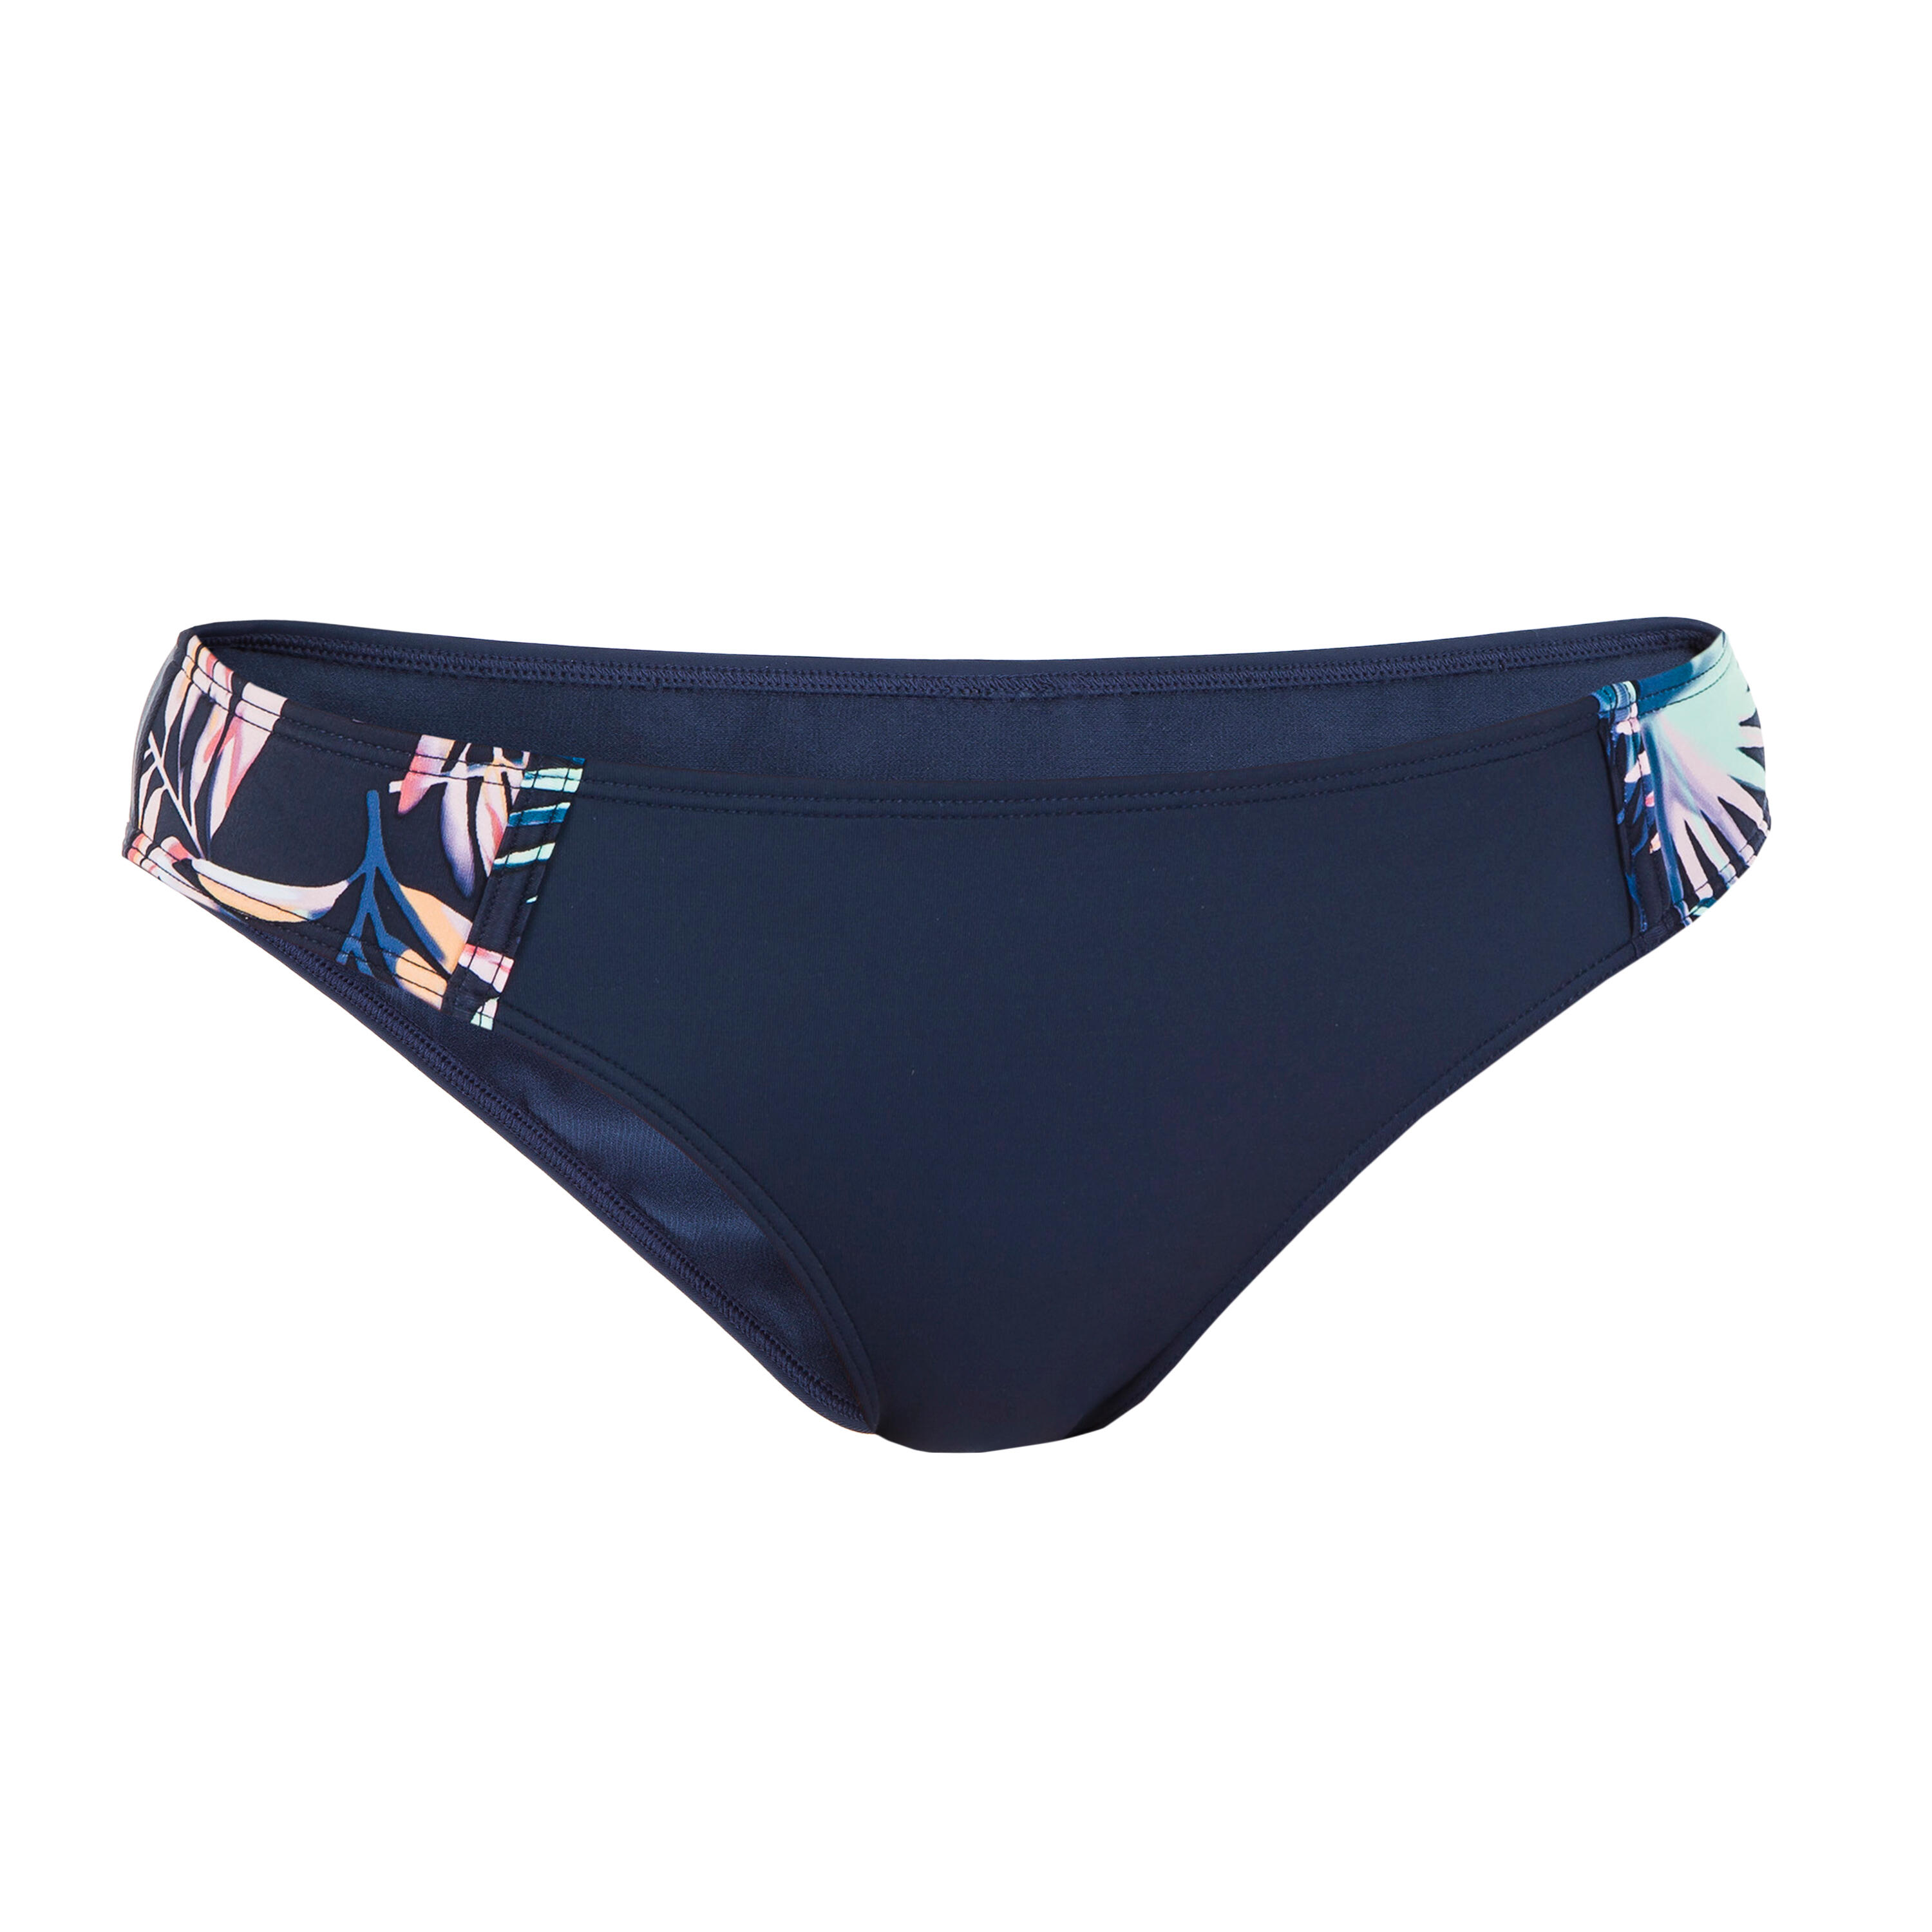 Women's swimsuit bottoms Roxy Uni with floral yoke 3/7